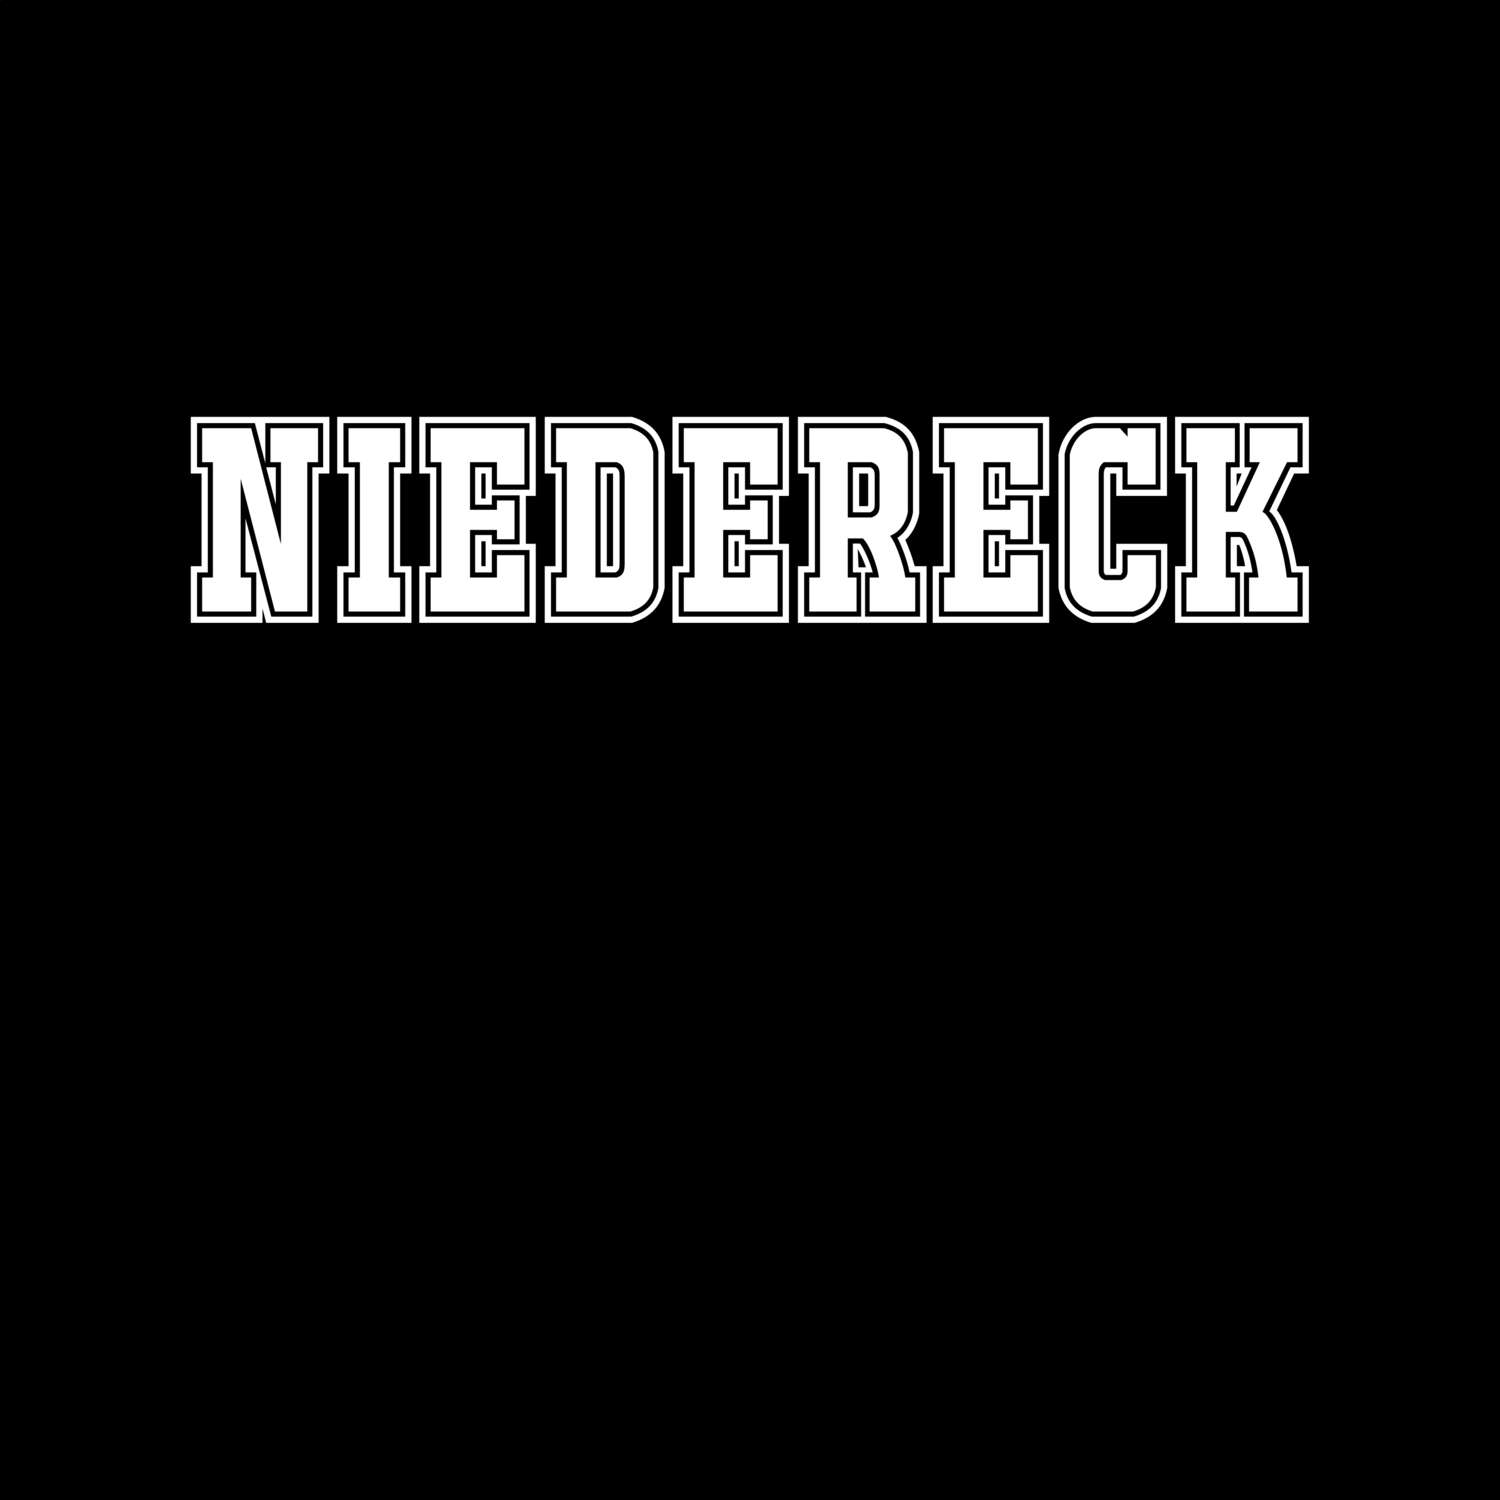 Niedereck T-Shirt »Classic«